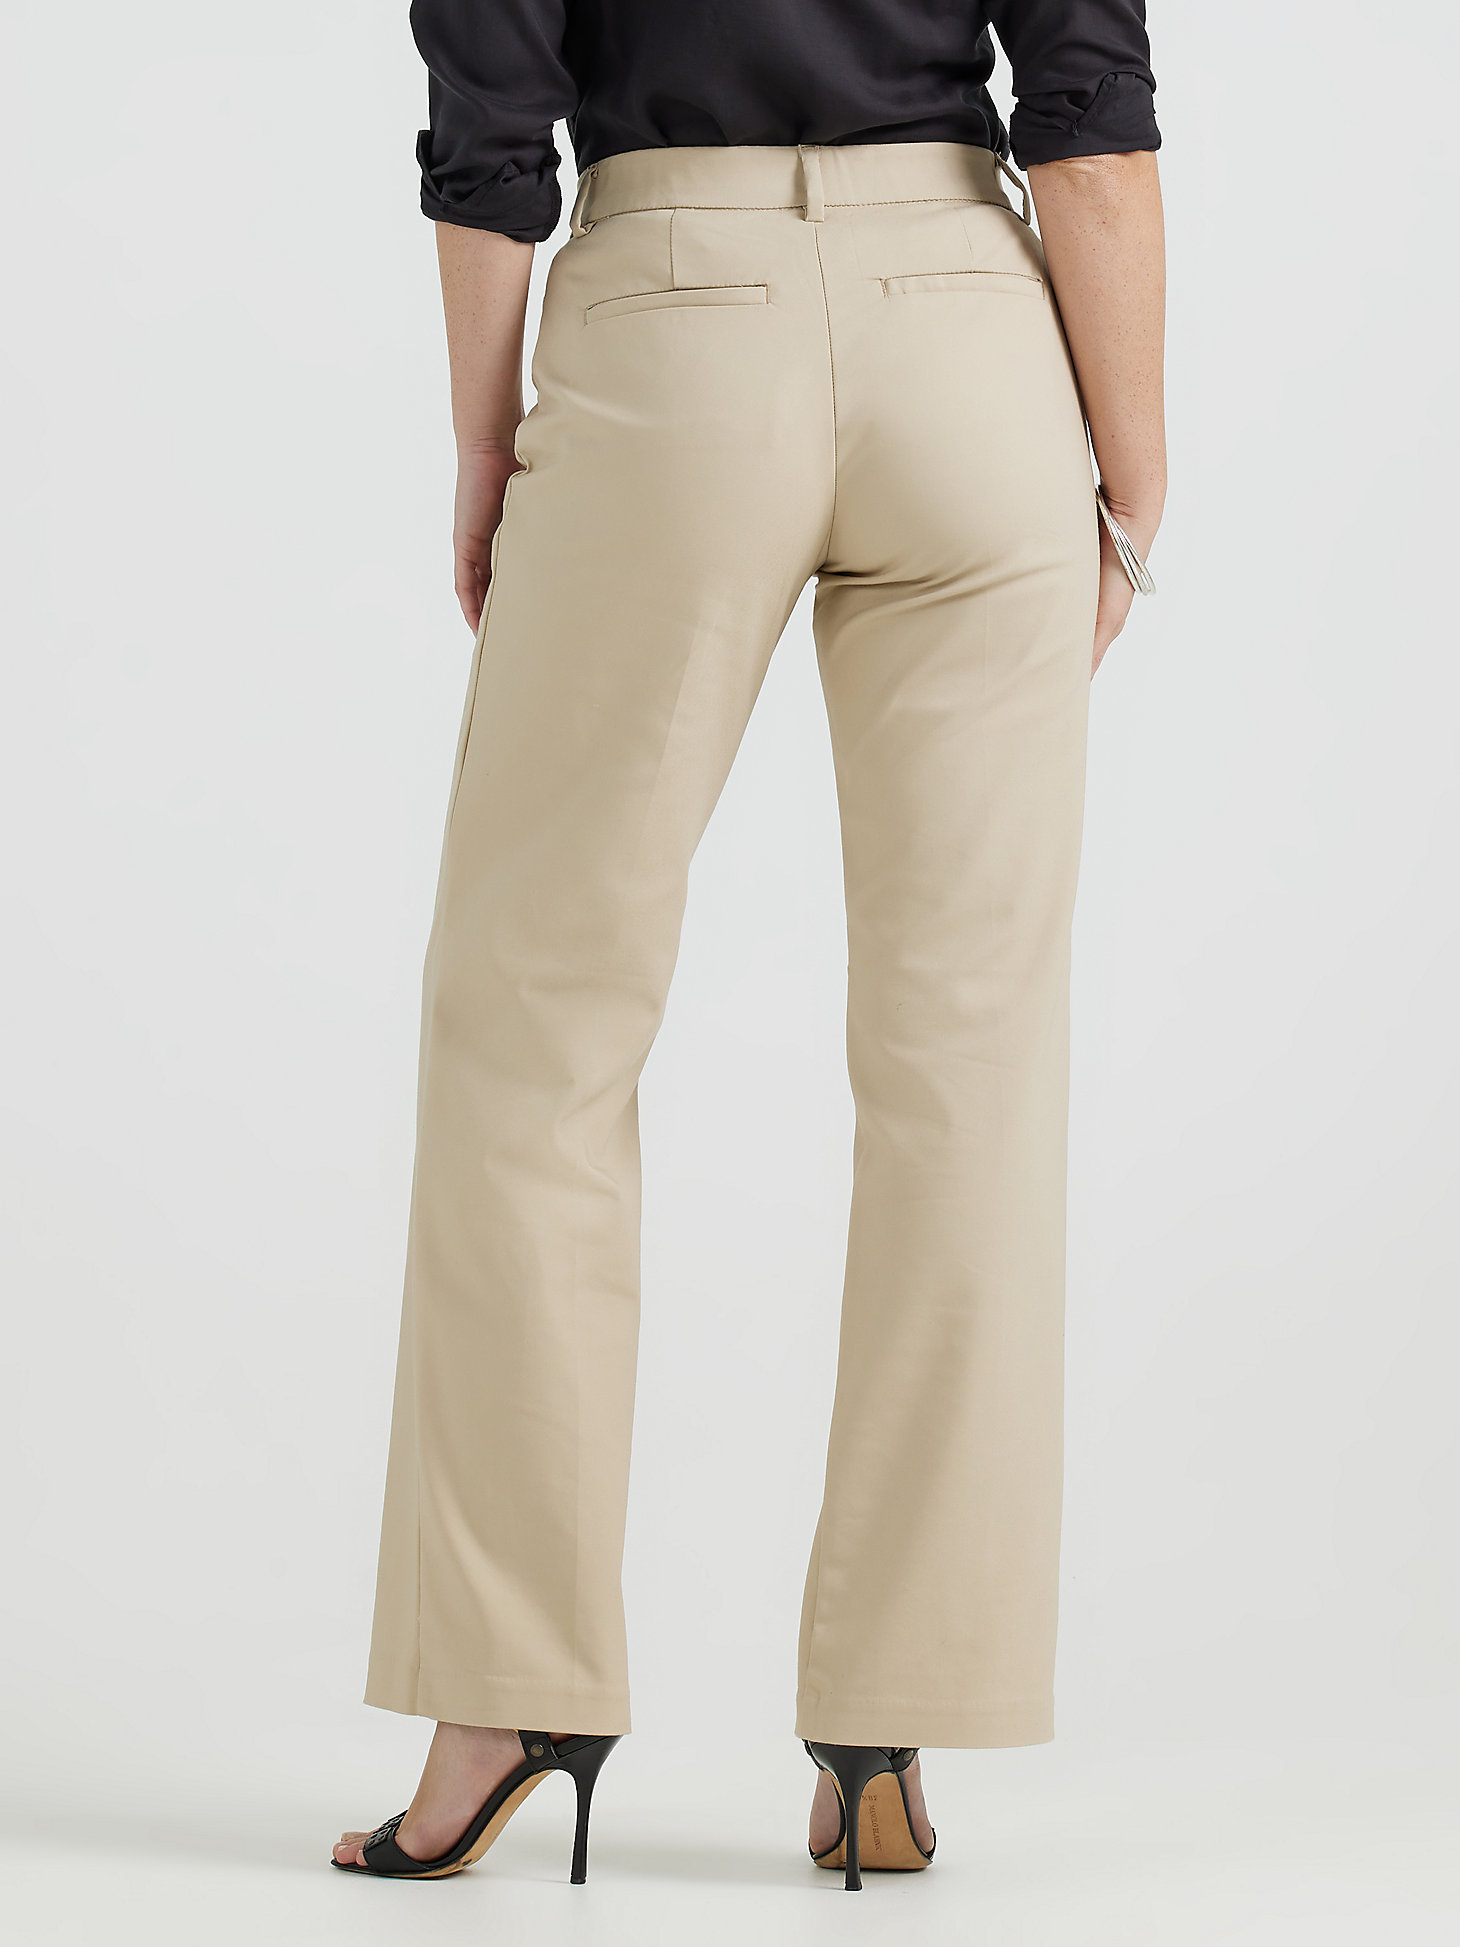 Women’s Flex Motion Regular Fit Trouser Pant in Bunglow Khaki alternative view 2